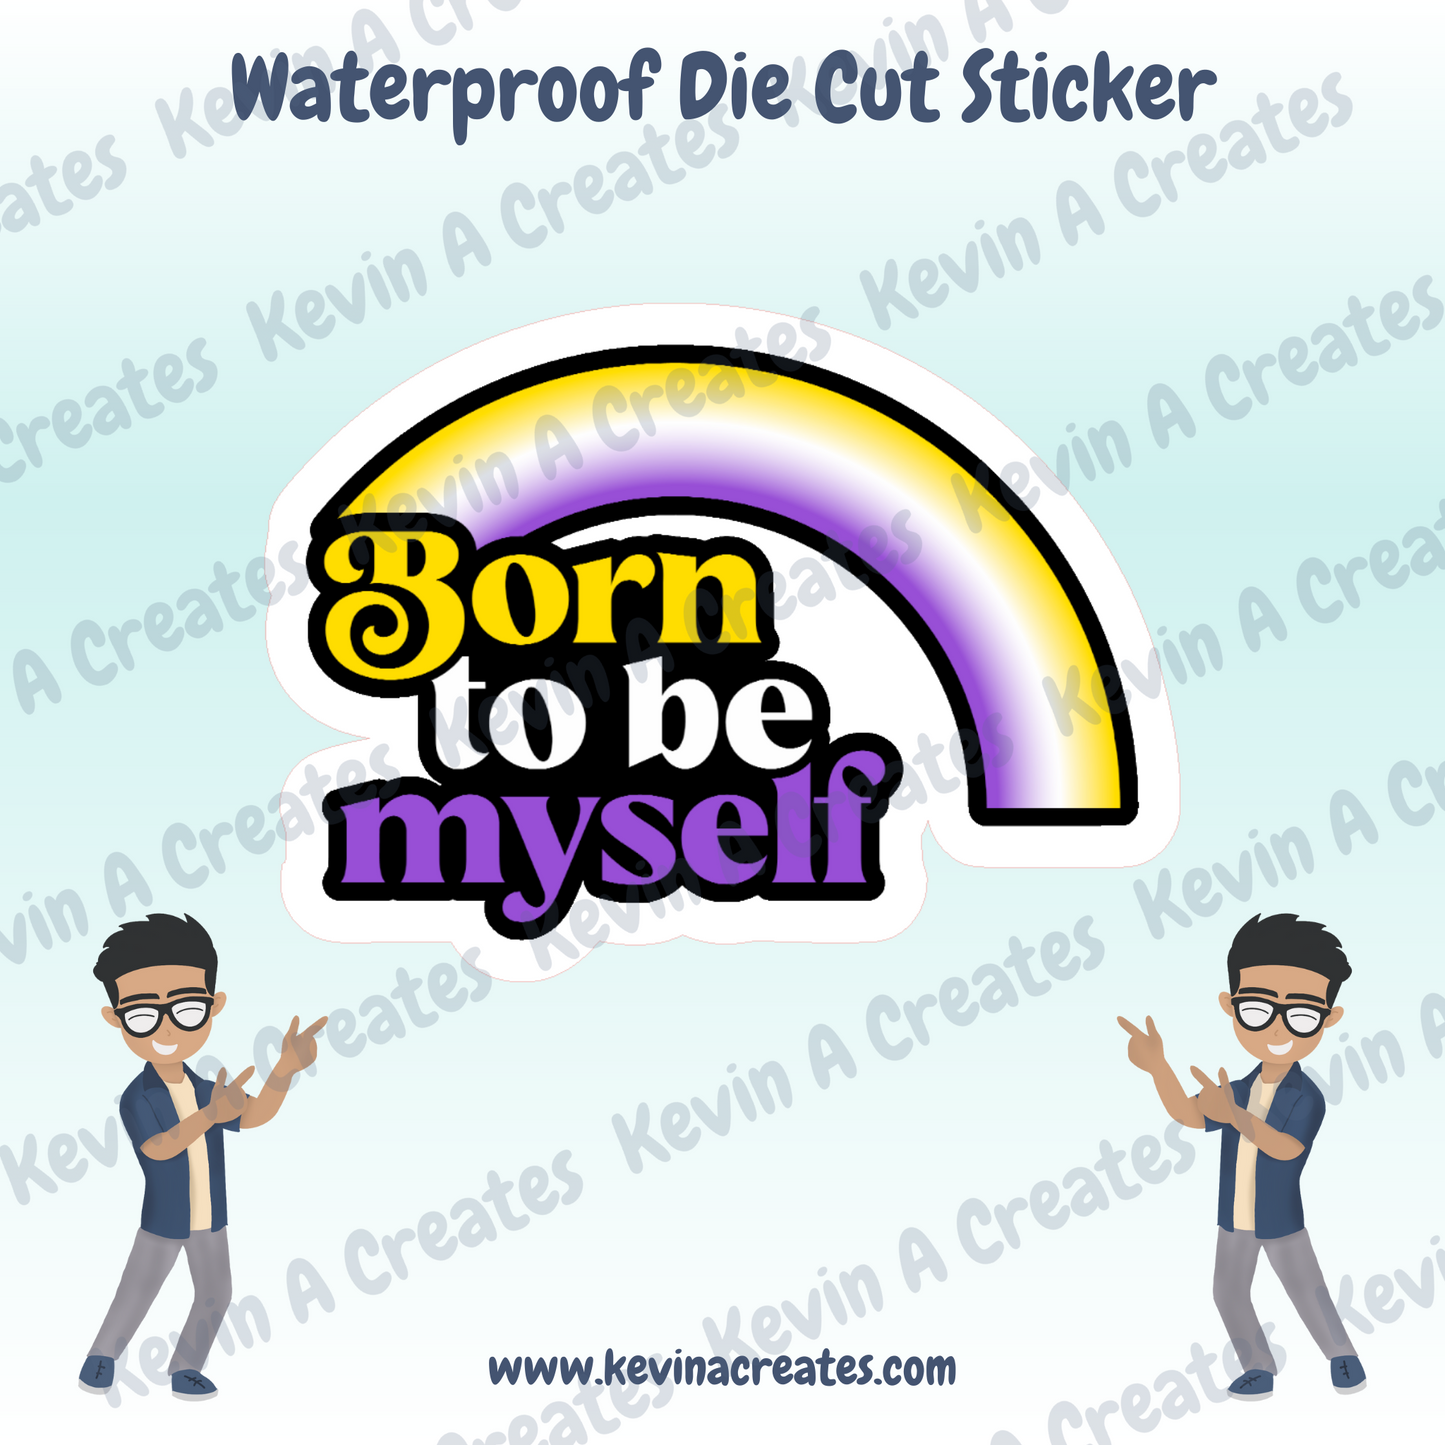 DC-089, Born To Be Myself - Non Binary Pride Die Cut Stickers